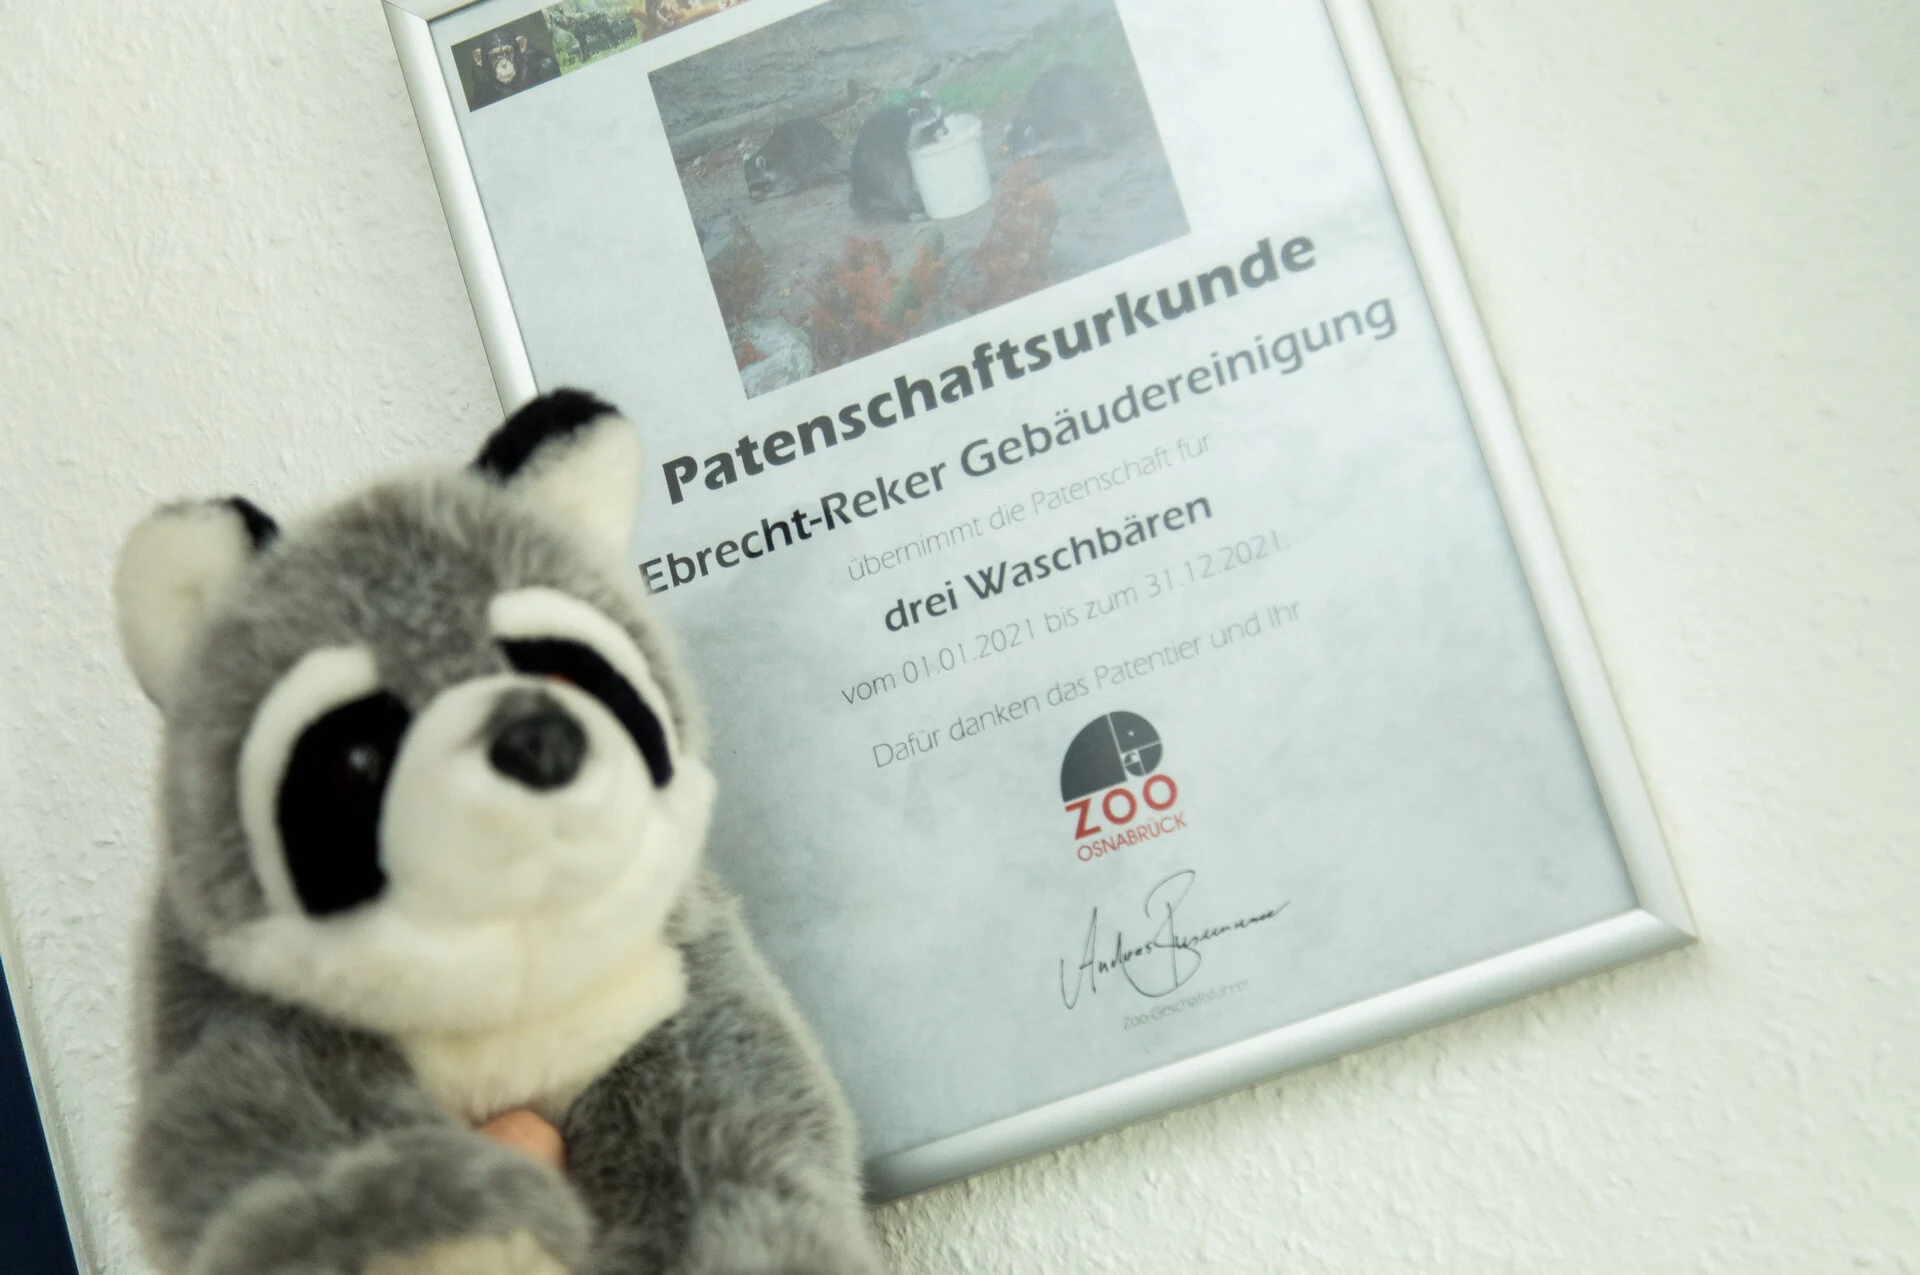 Urkunde Zoopatenschaft für Waschbären Osnabrück und Kuscheltier Waschbäre. Ebrecht Reker Osnabrück